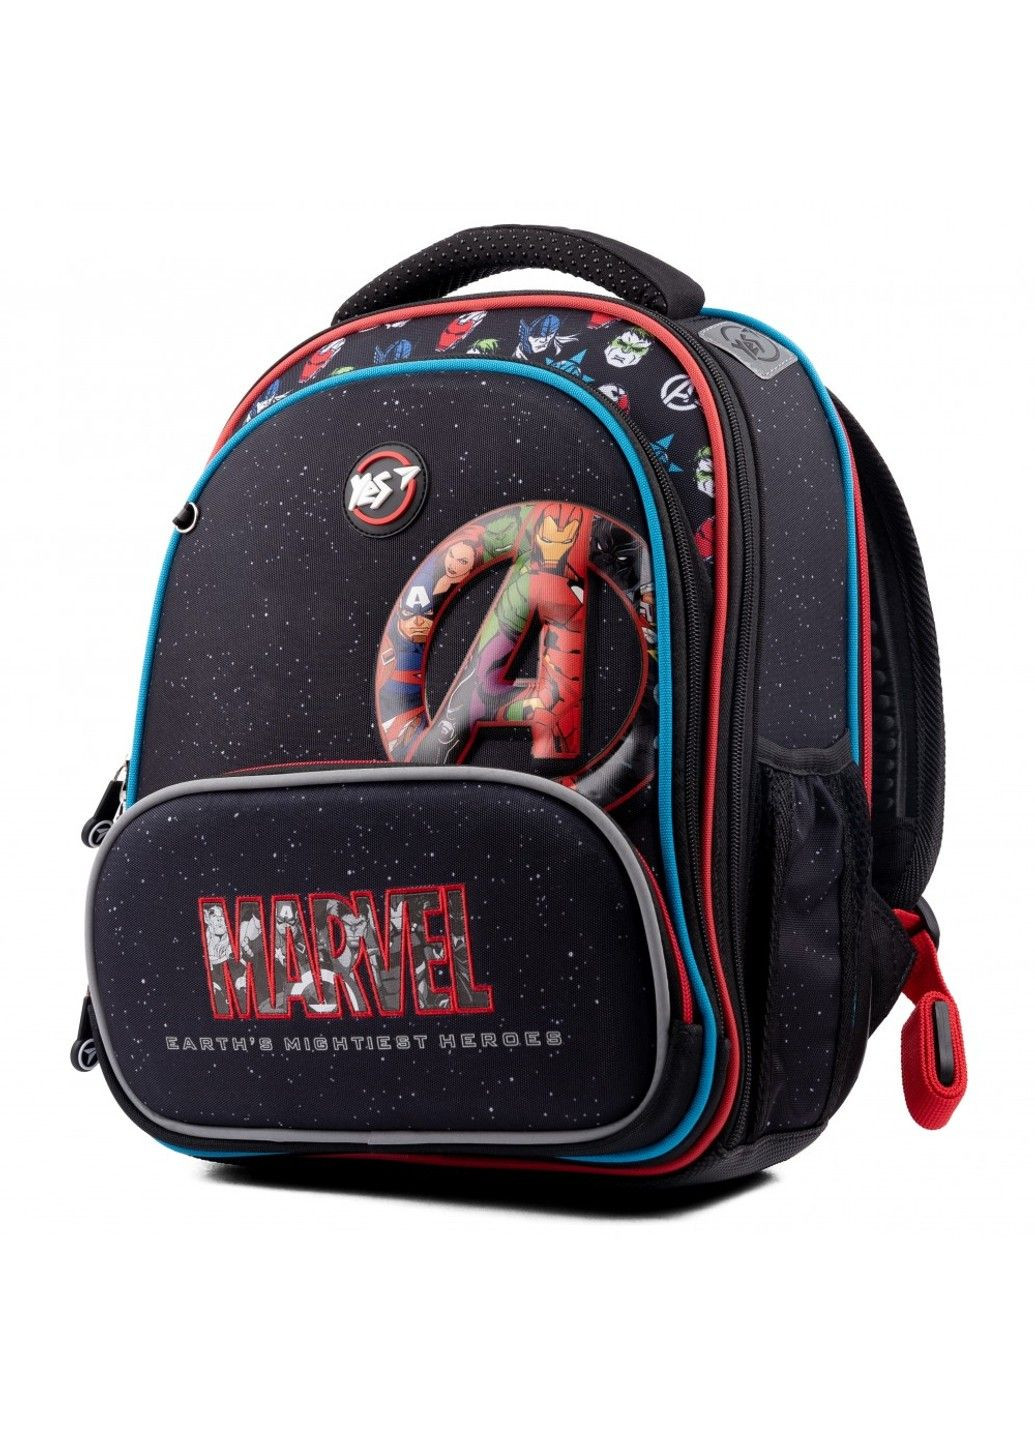 Рюкзак школьный для младших классов S-30 JUNO ULTRA Marvel Avengers Yes (278404528)